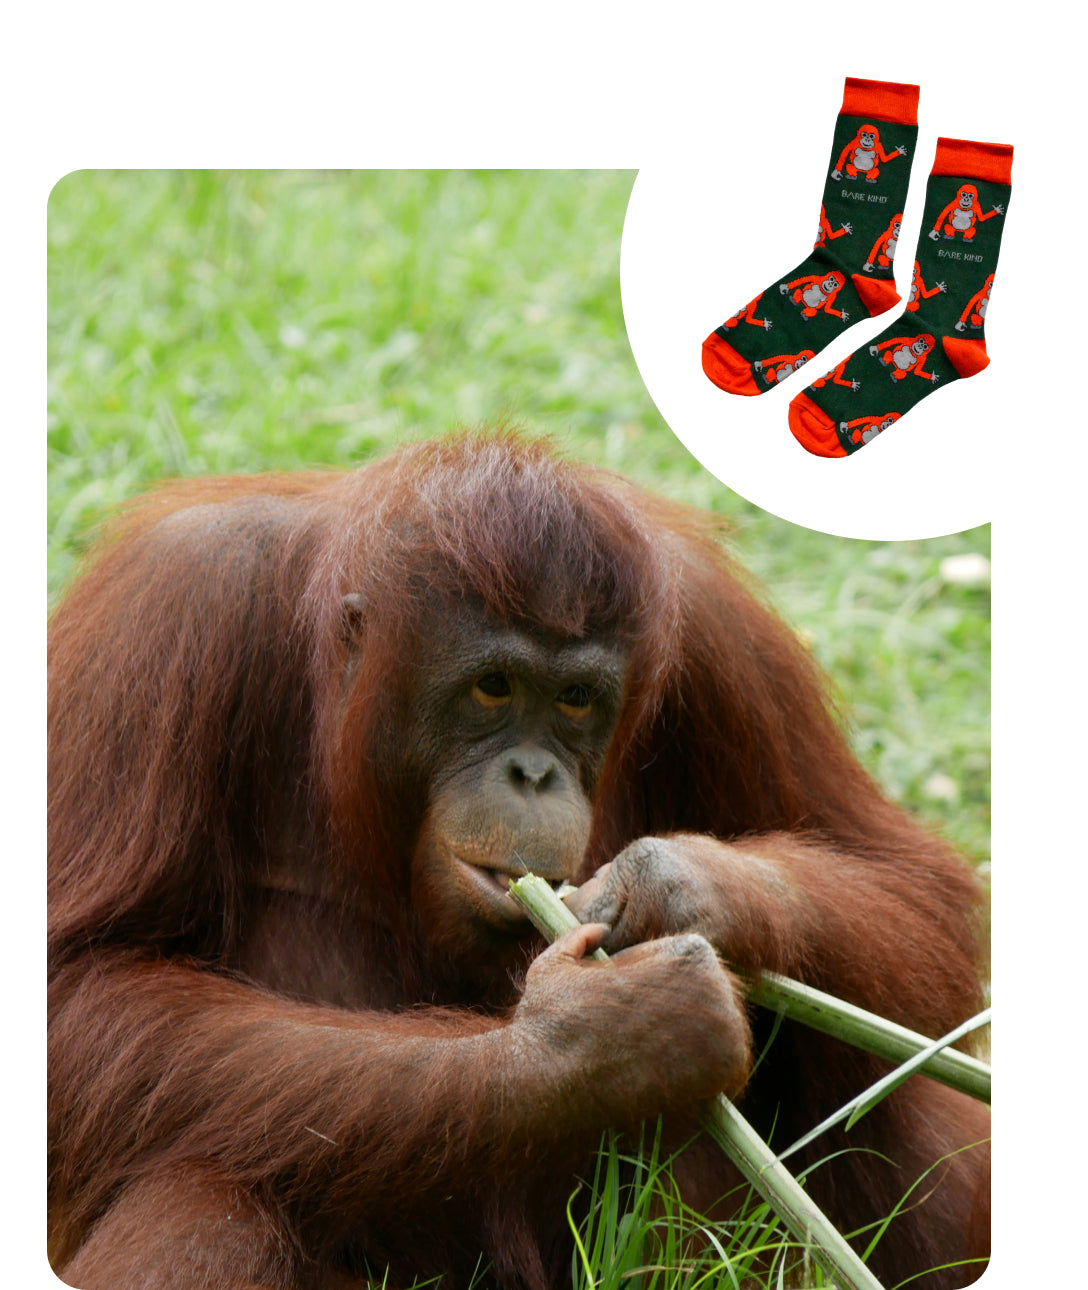 orangutan image and orangutan bamboo socks